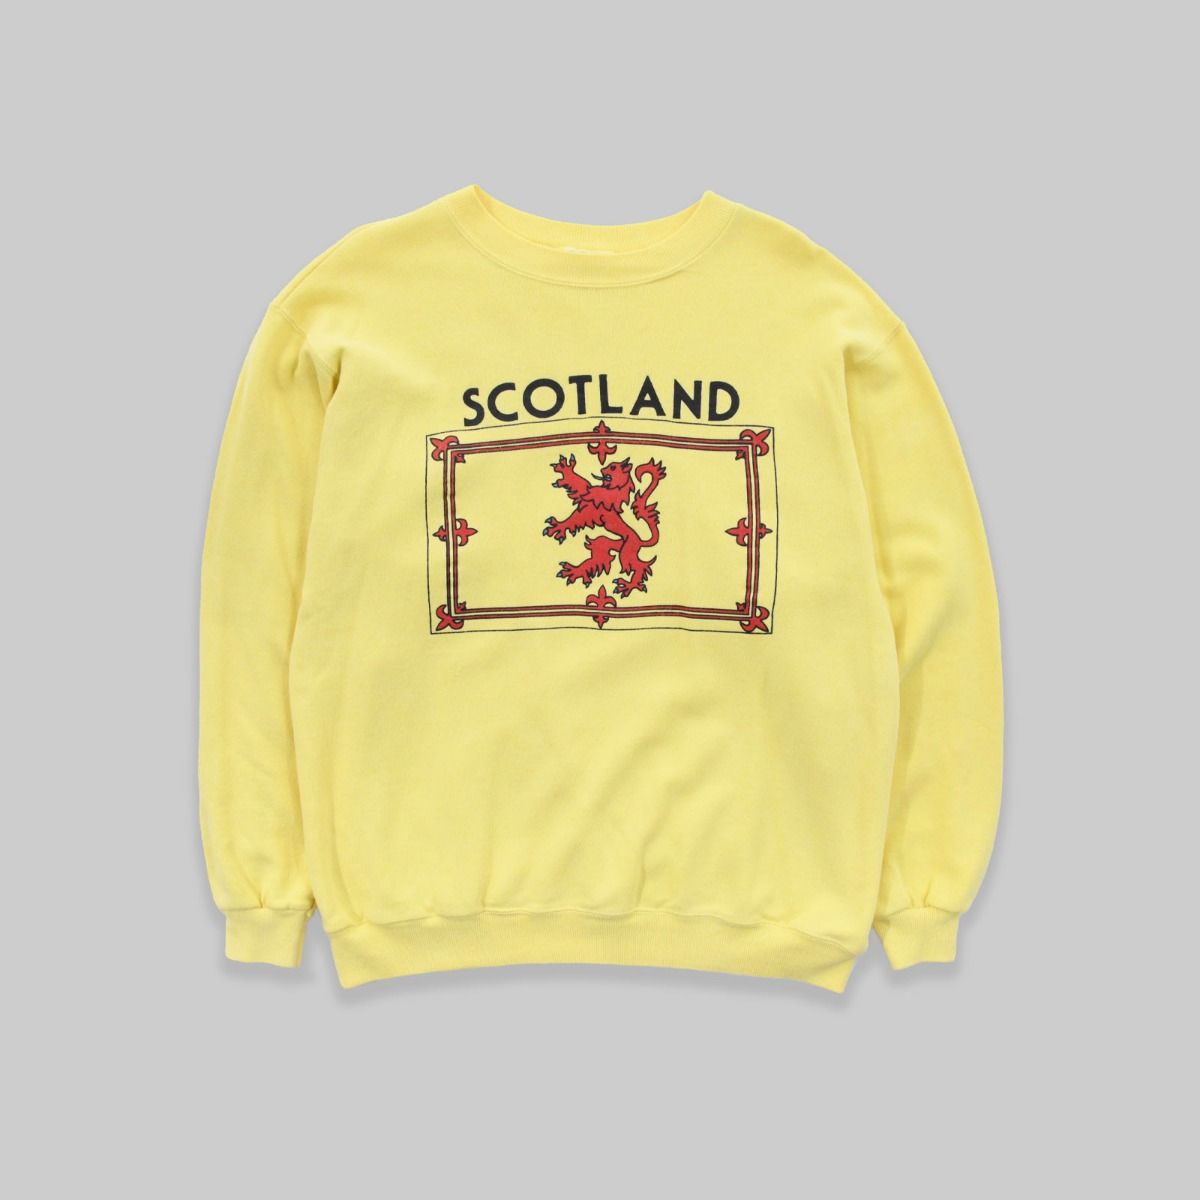 Scotland 1990s Sweatshirt